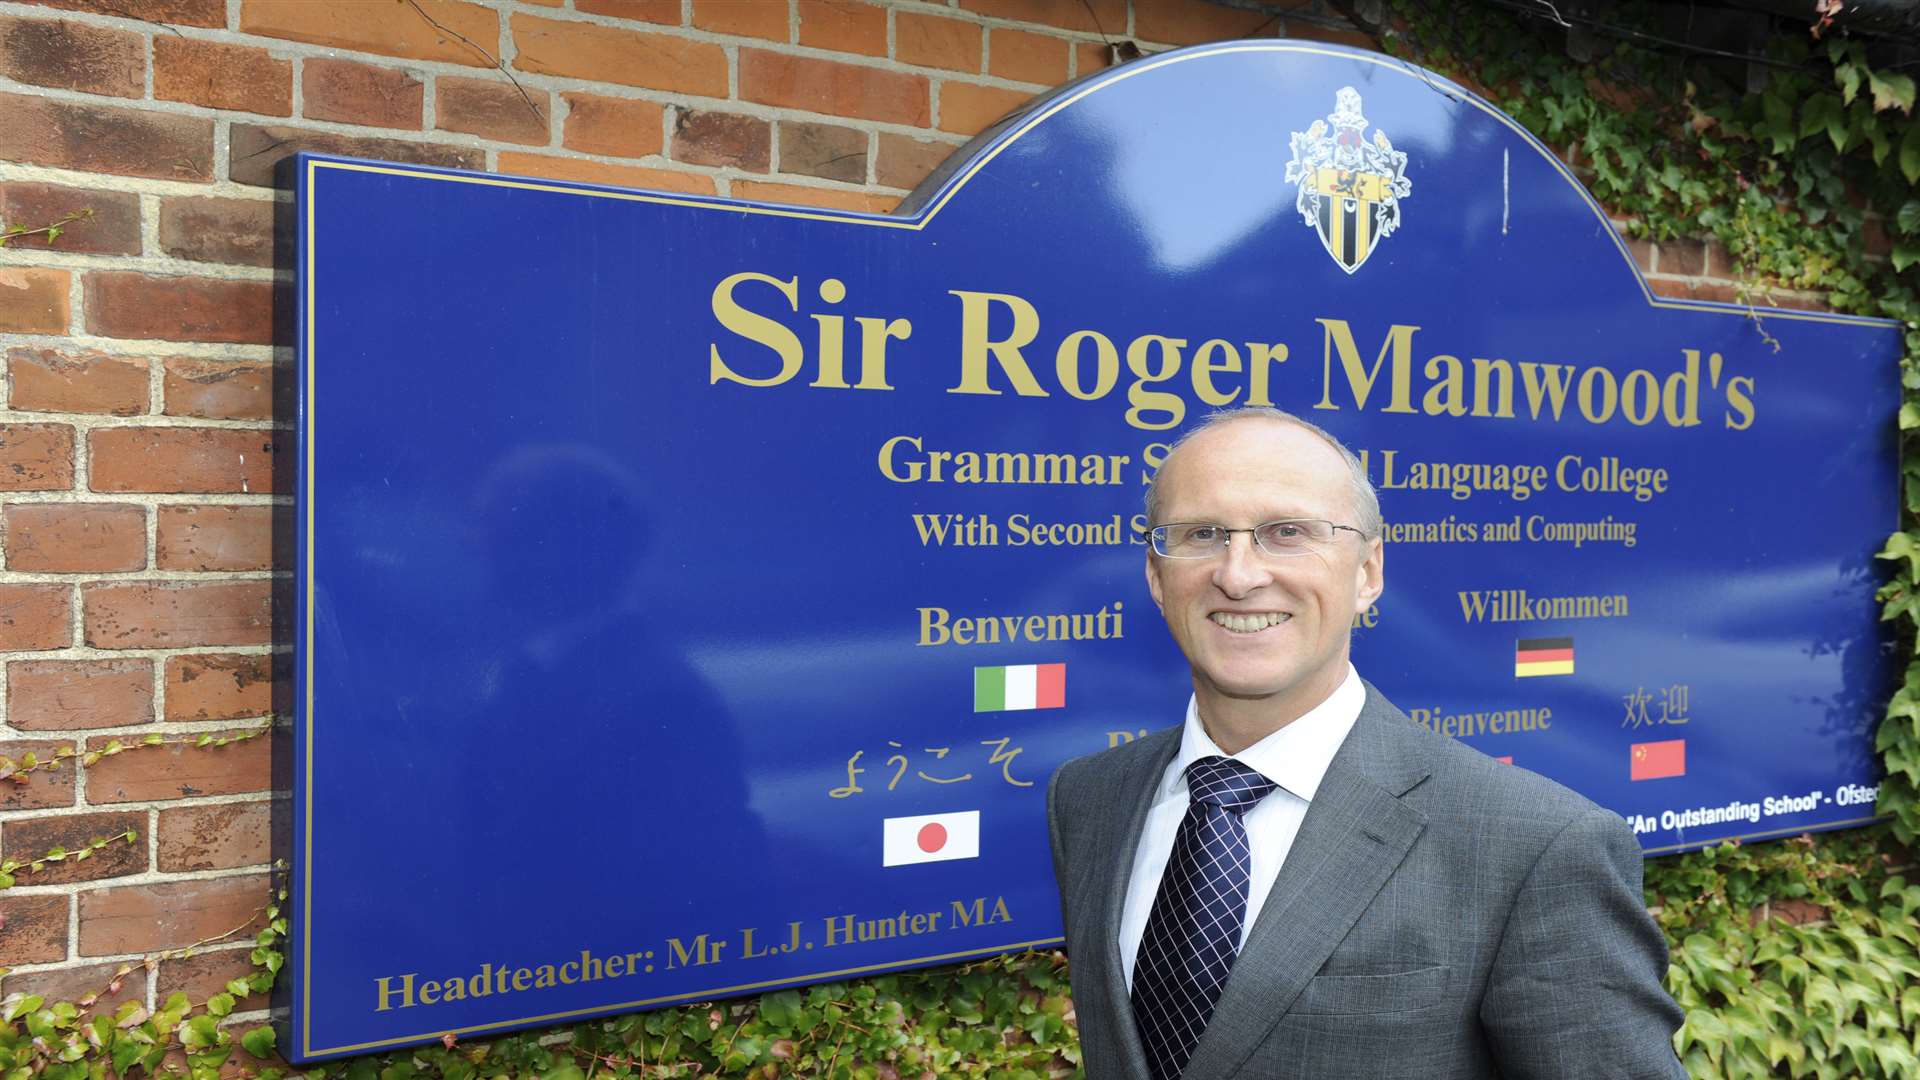 Head teacher at Sir Roger Manwoods, Lee Hunter